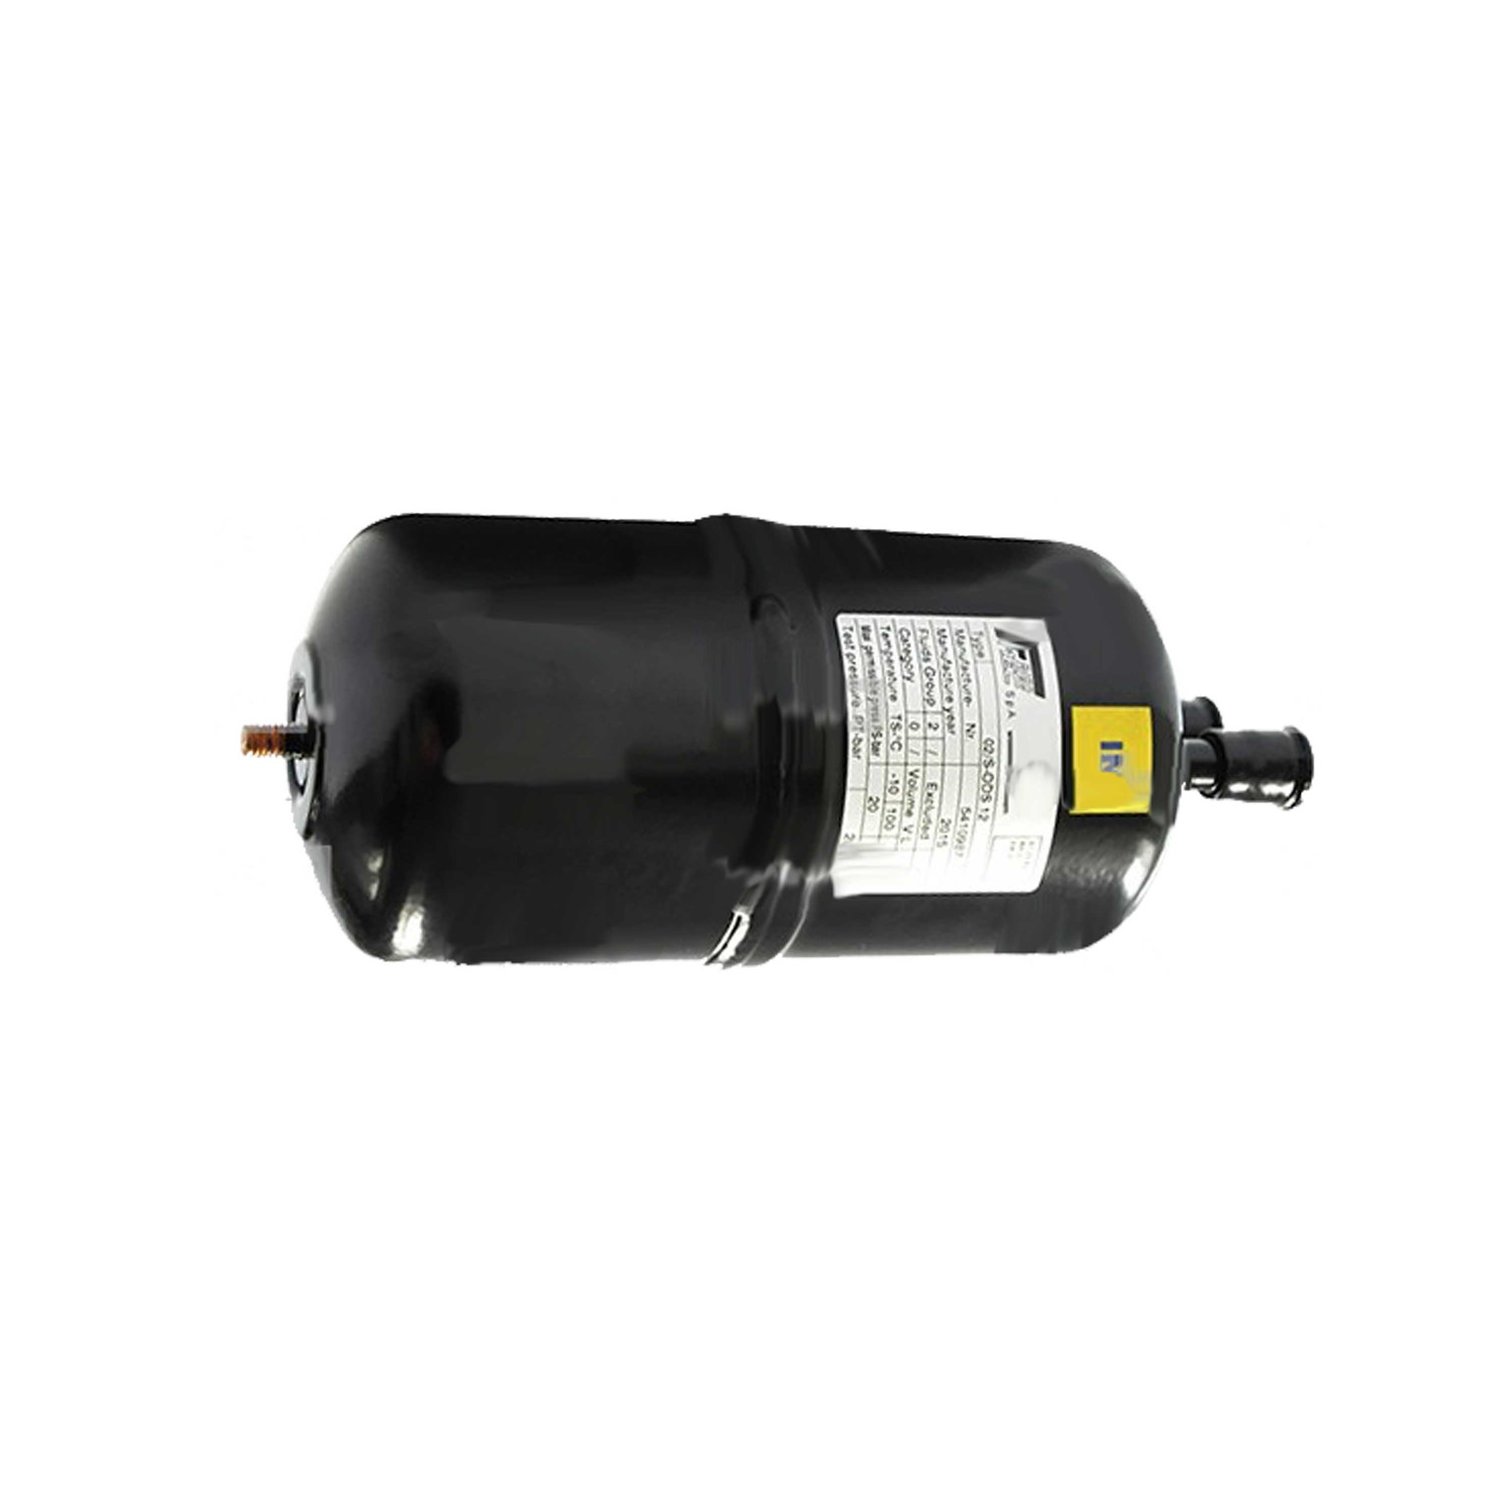 Séparateur de liquide Frigomec 06 / S 28 mm, volume: 4,6l, raccordement: 28 mm ODS